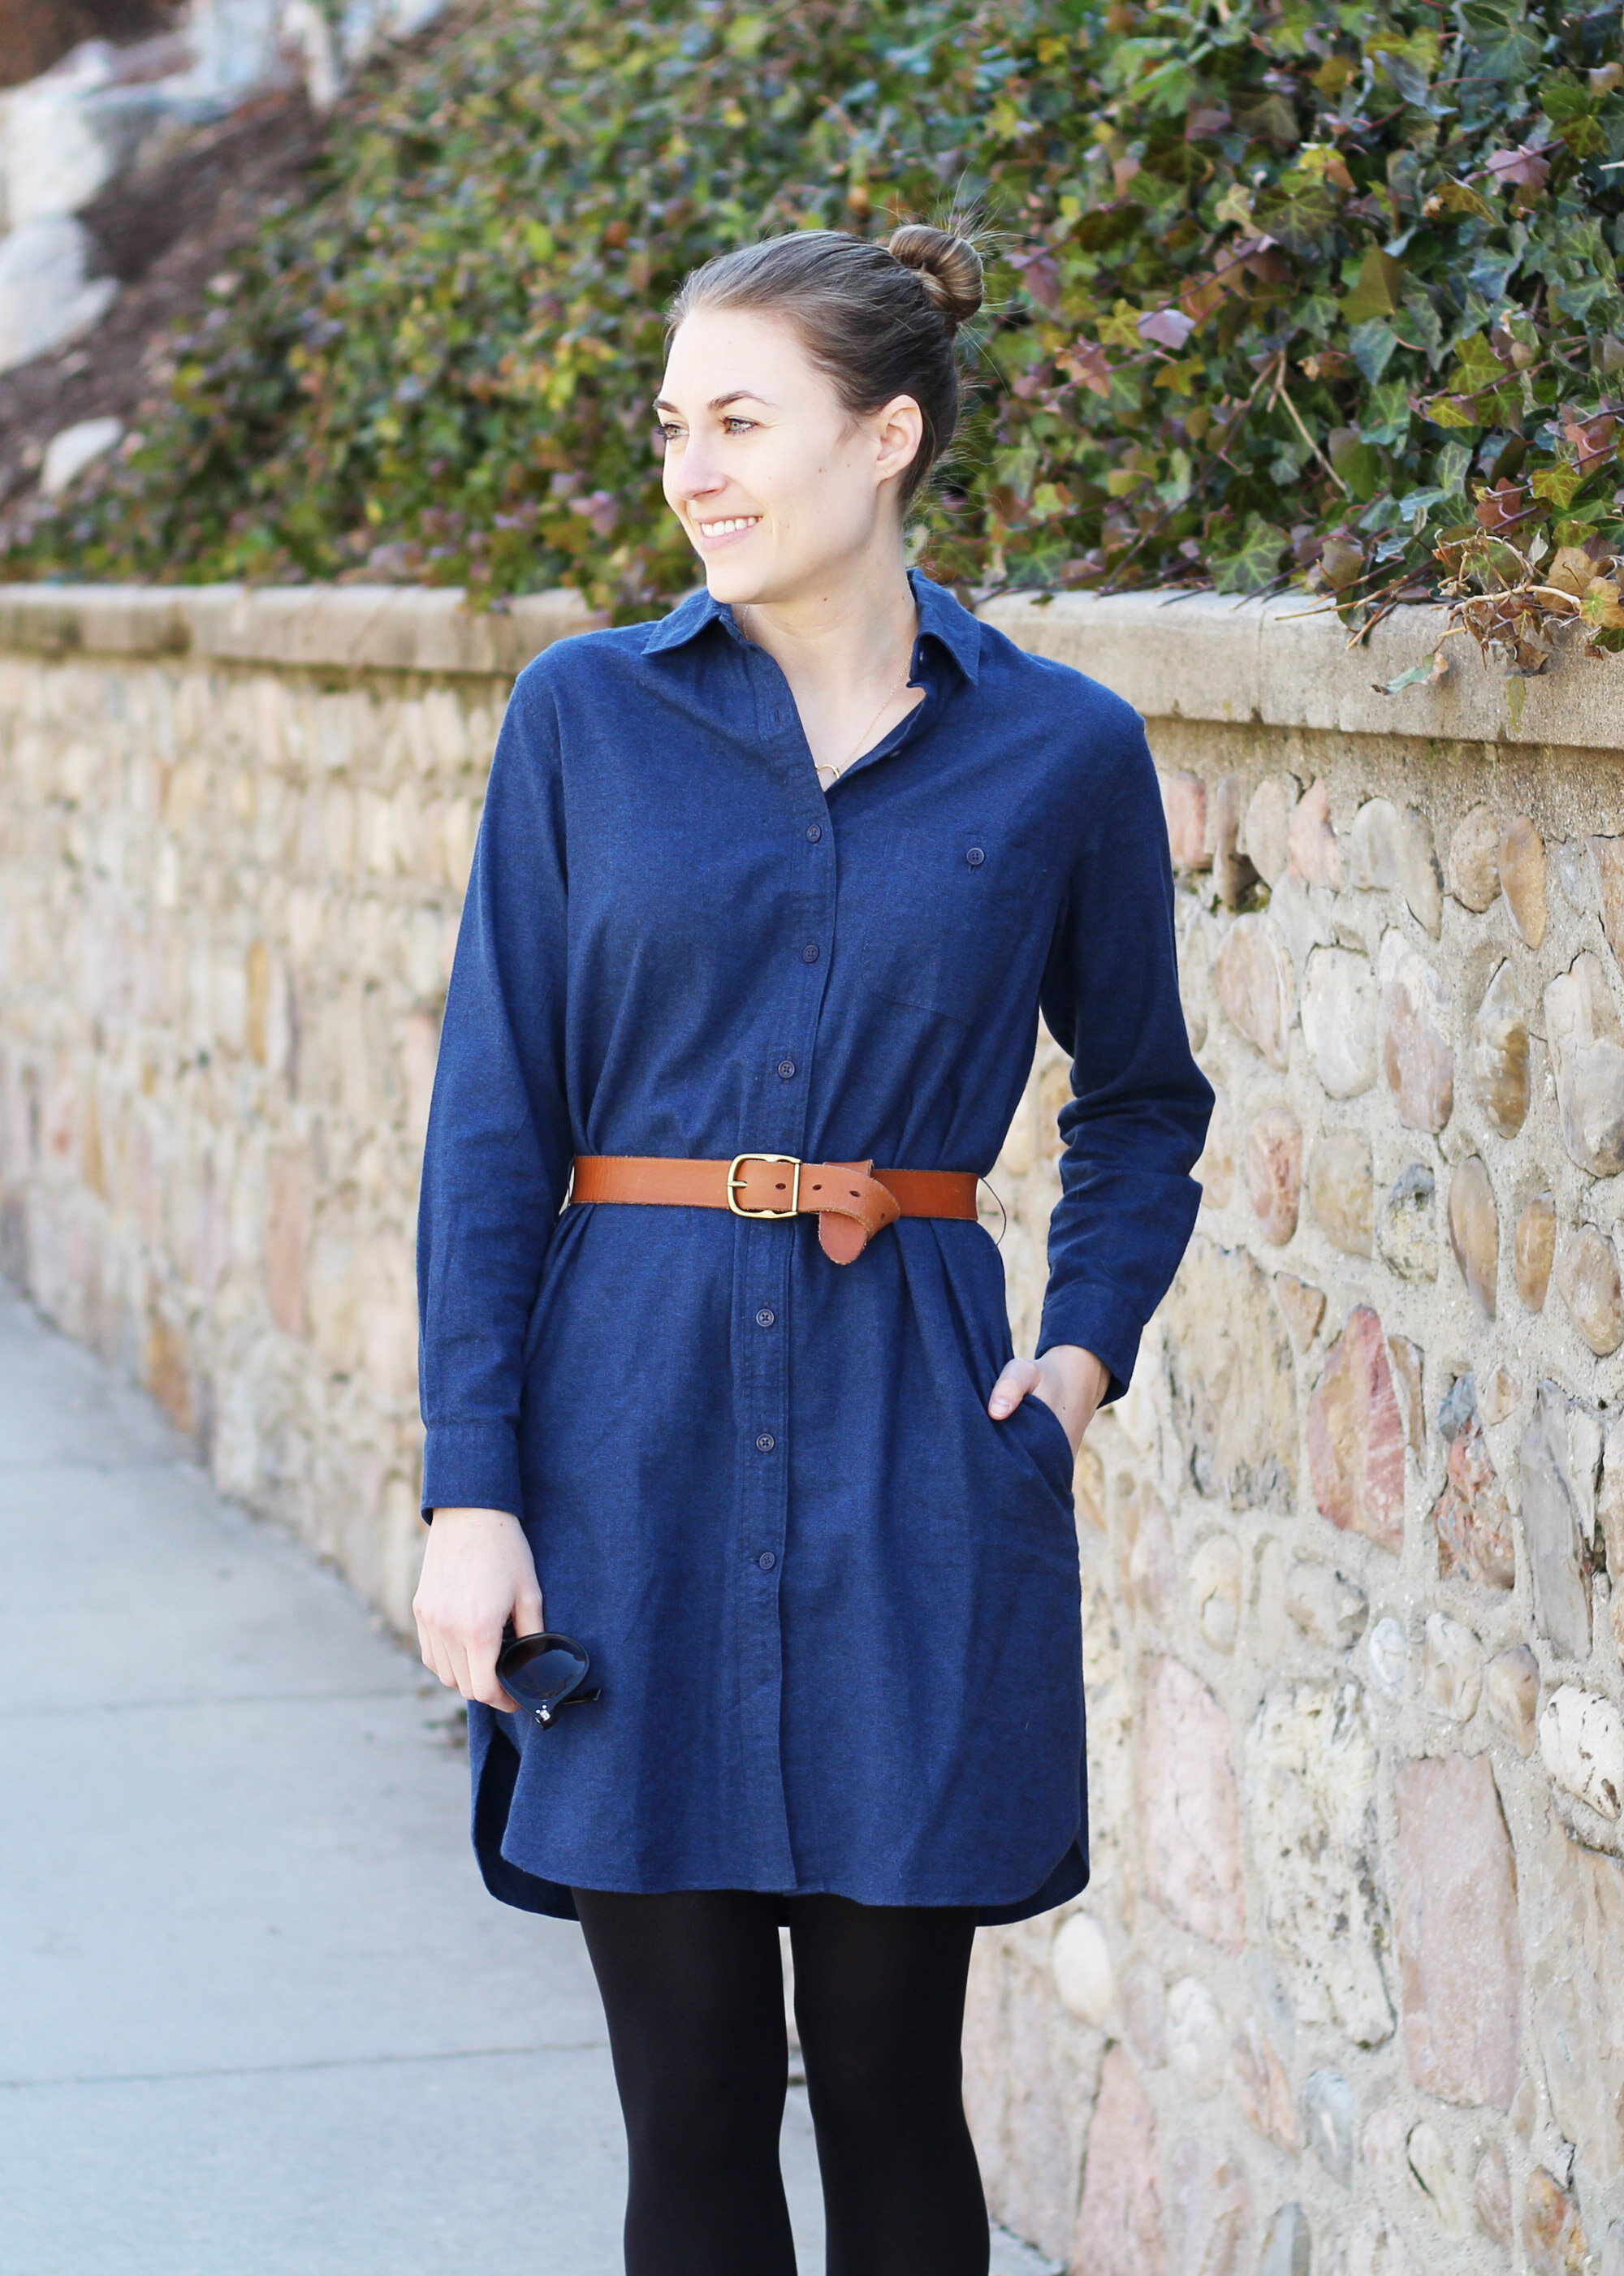 3 Ways to Wear a Plaid Flannel Dress